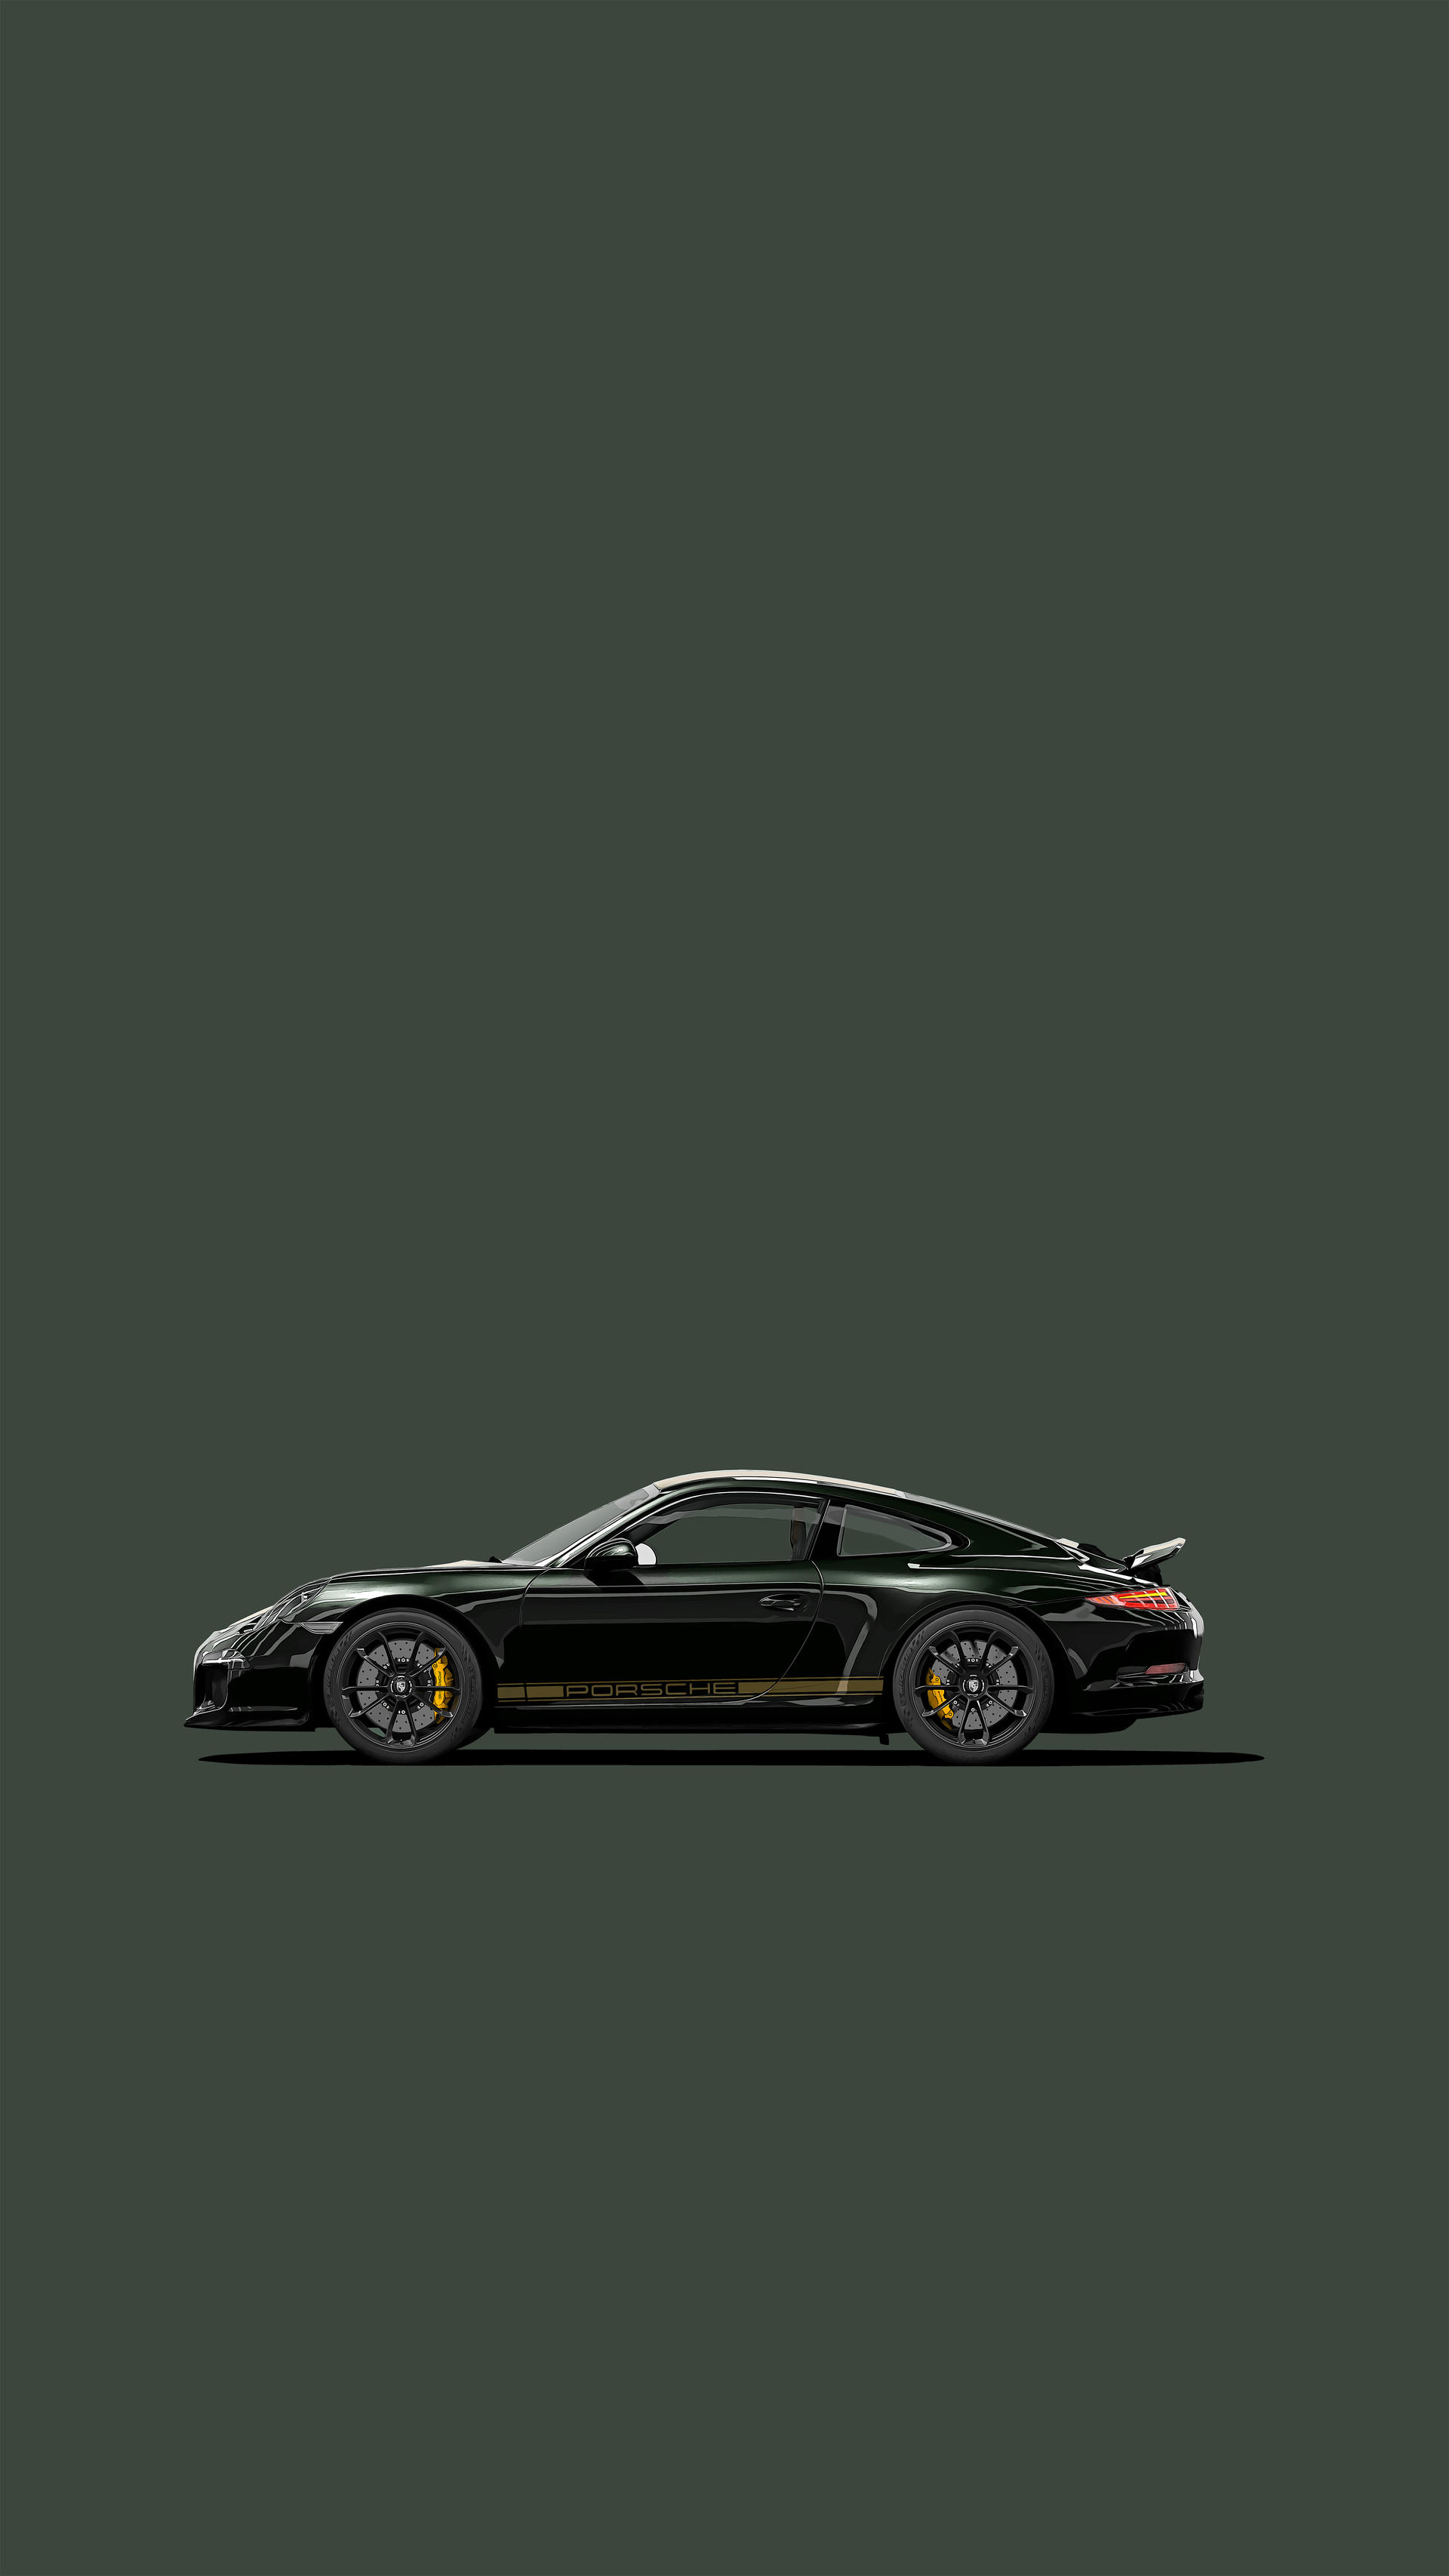 Porsche 911 R - Mobile Wallpaper by Need4Swede on DeviantArt